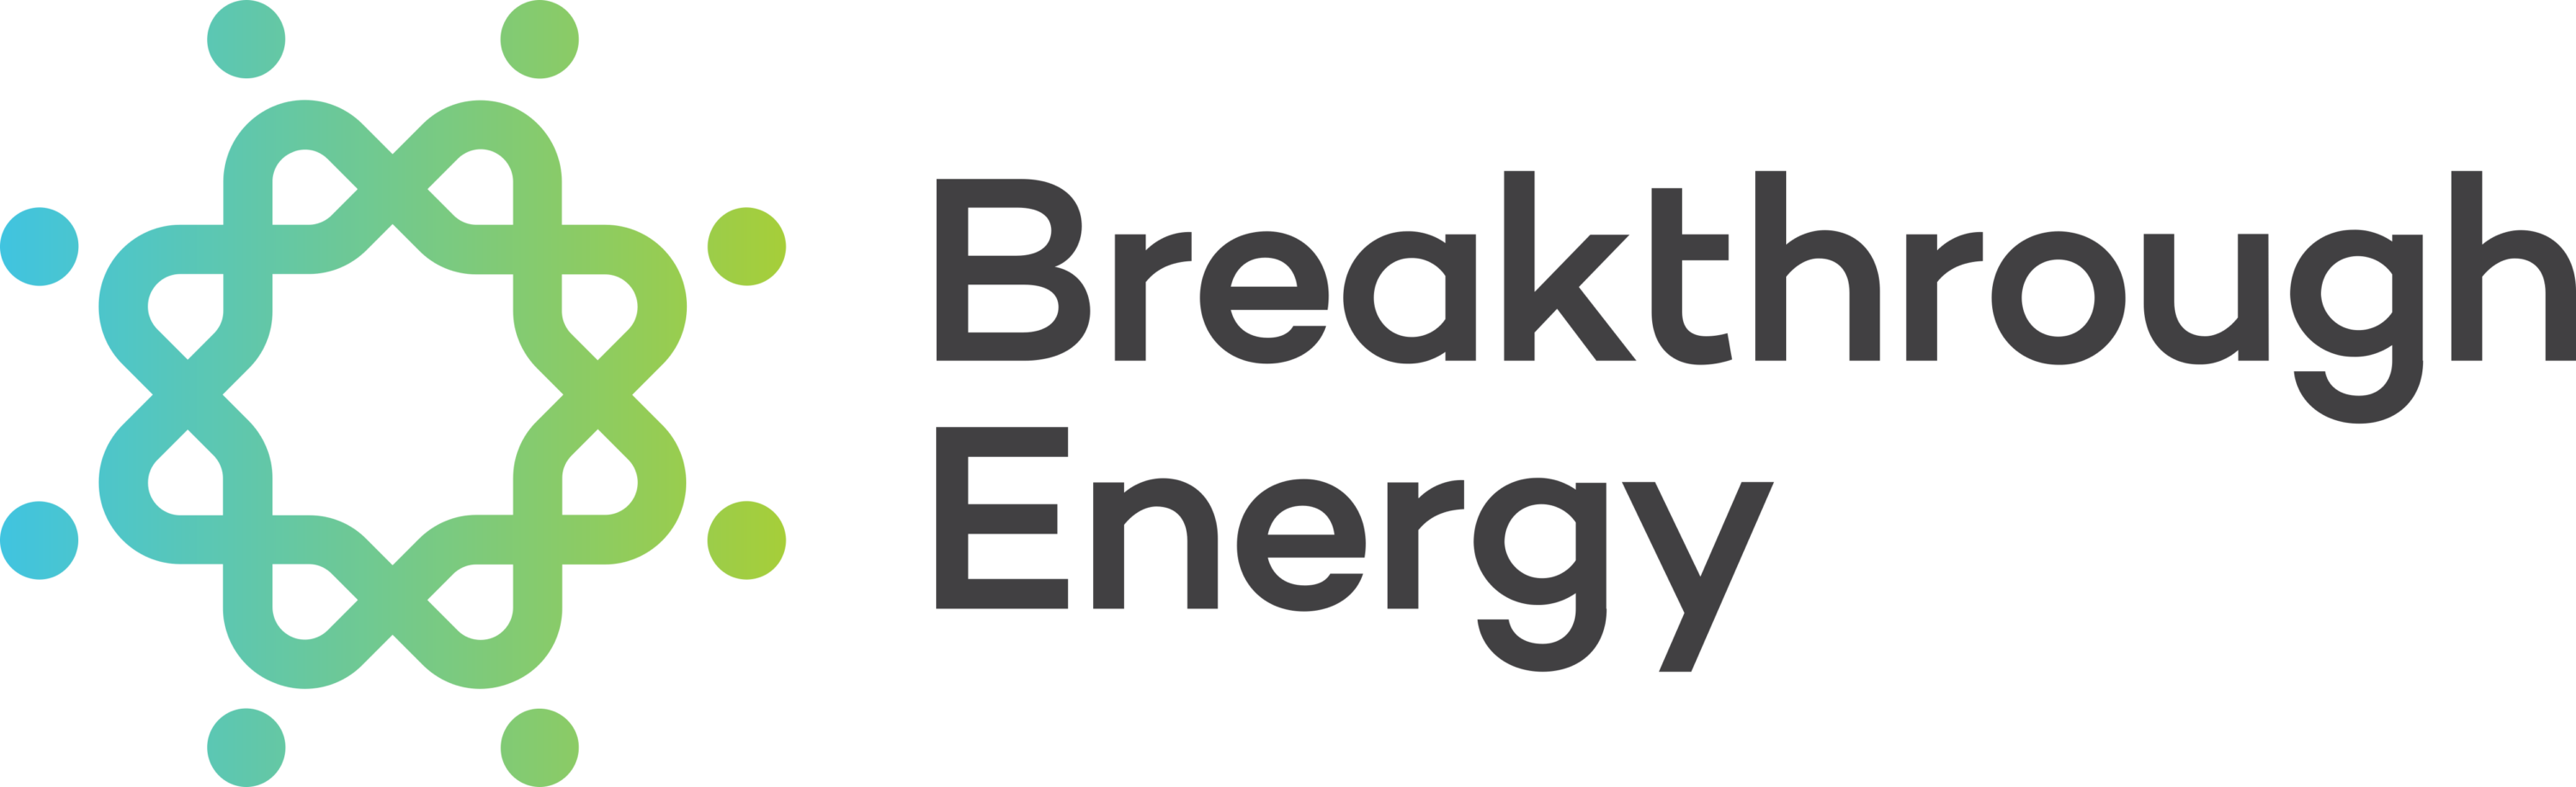 Breakthrough Energy Logo